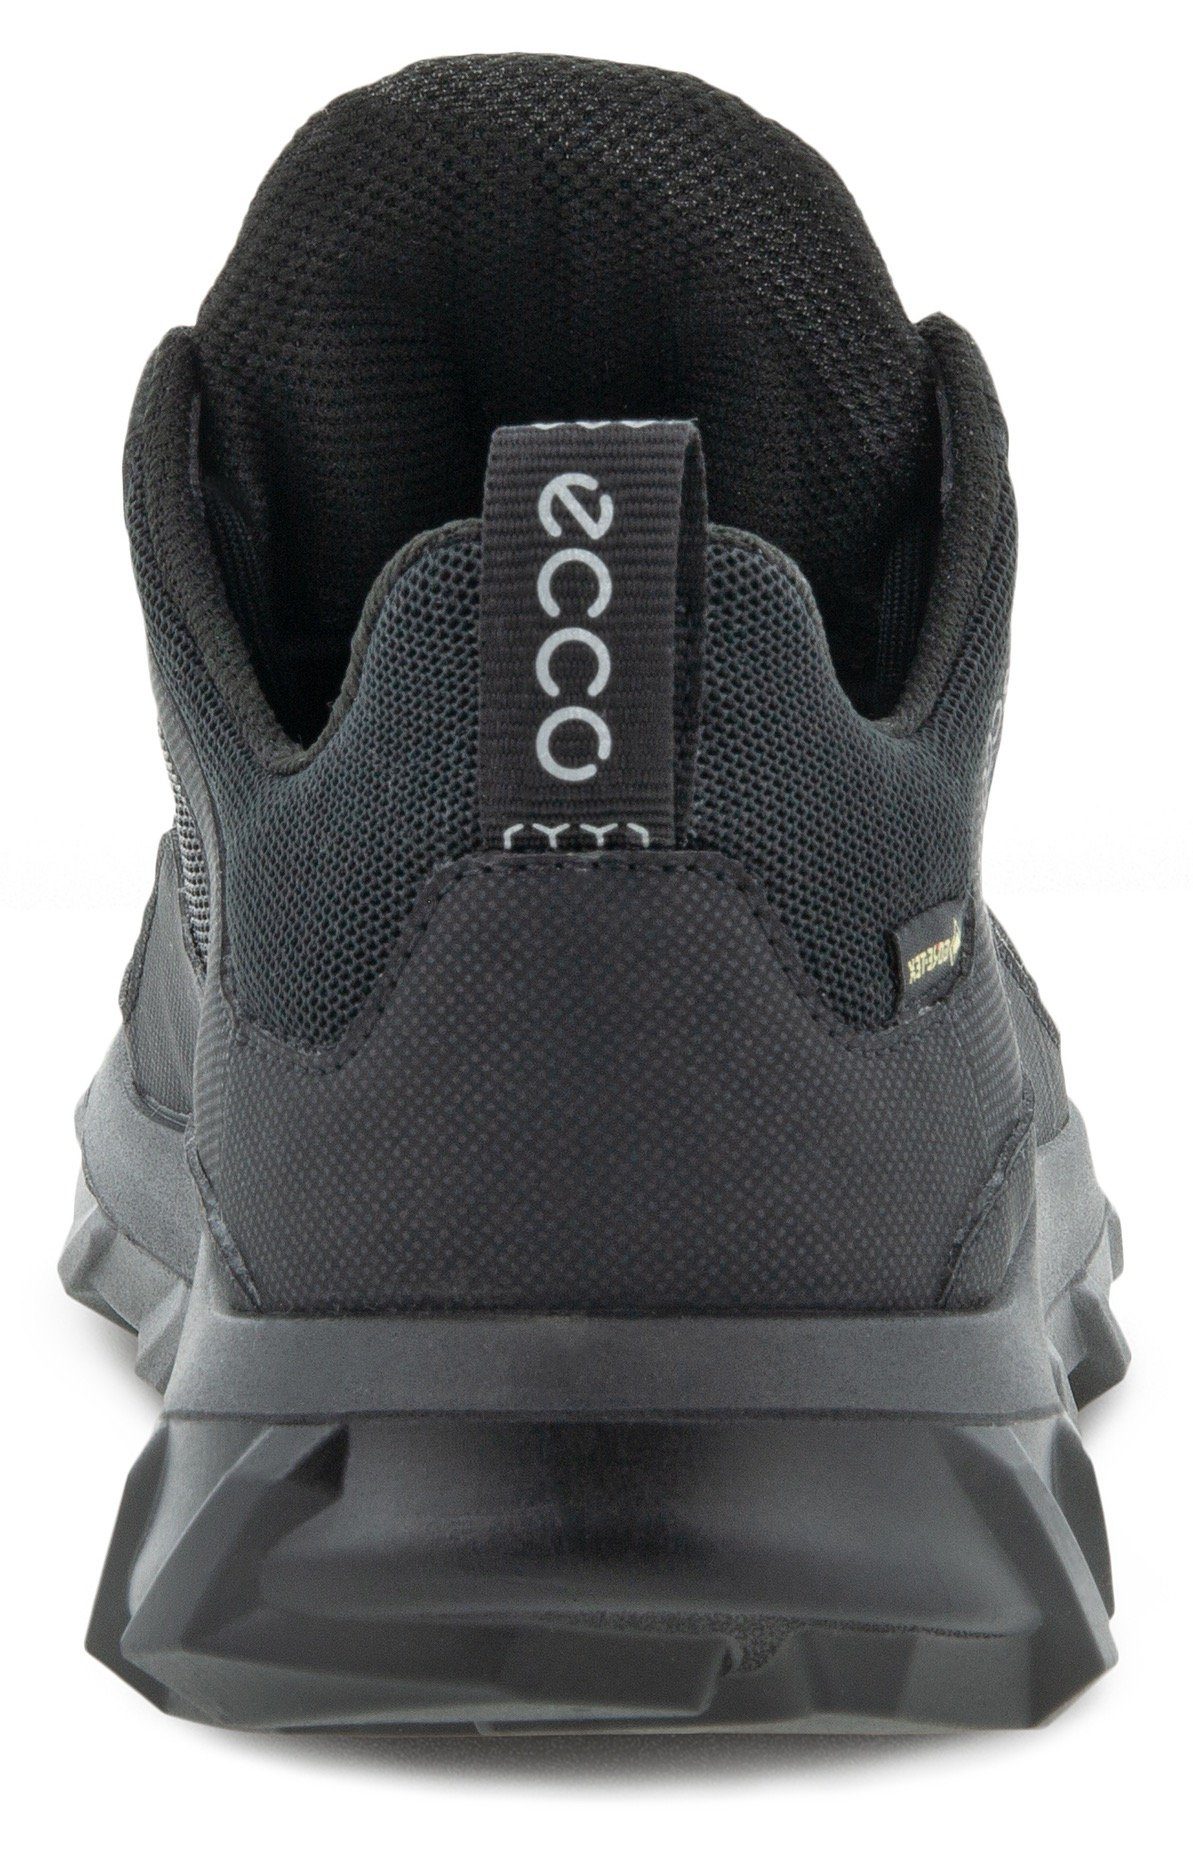 Ecco MX W Sneaker schwarz mit GORE-TEX winddichter Membran